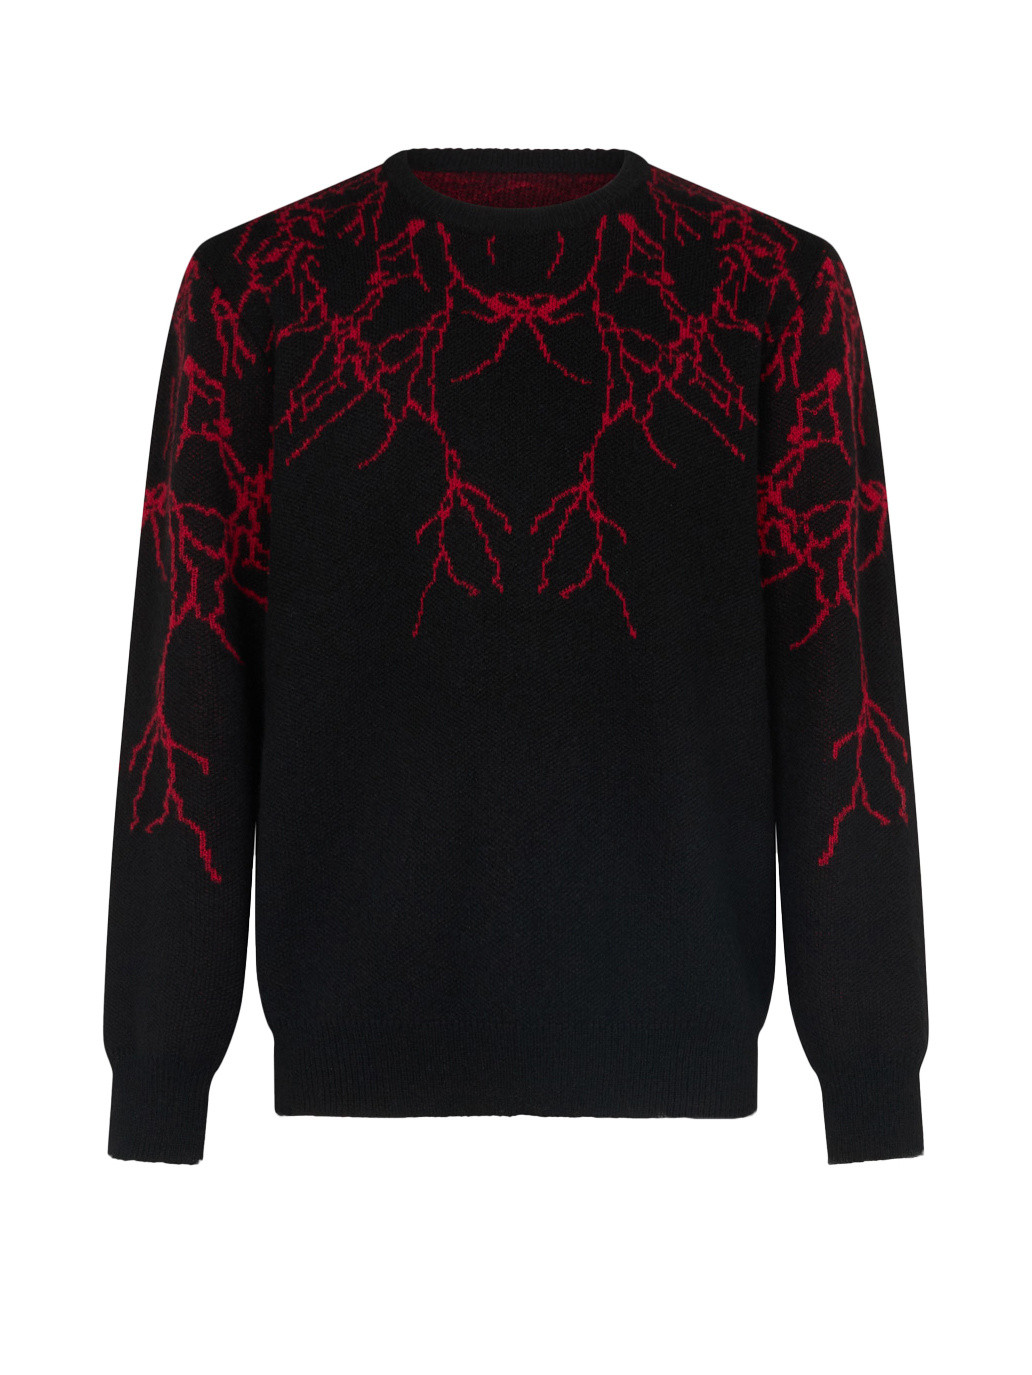 Phobia - Lightning bolt sweater, Black, large image number 0